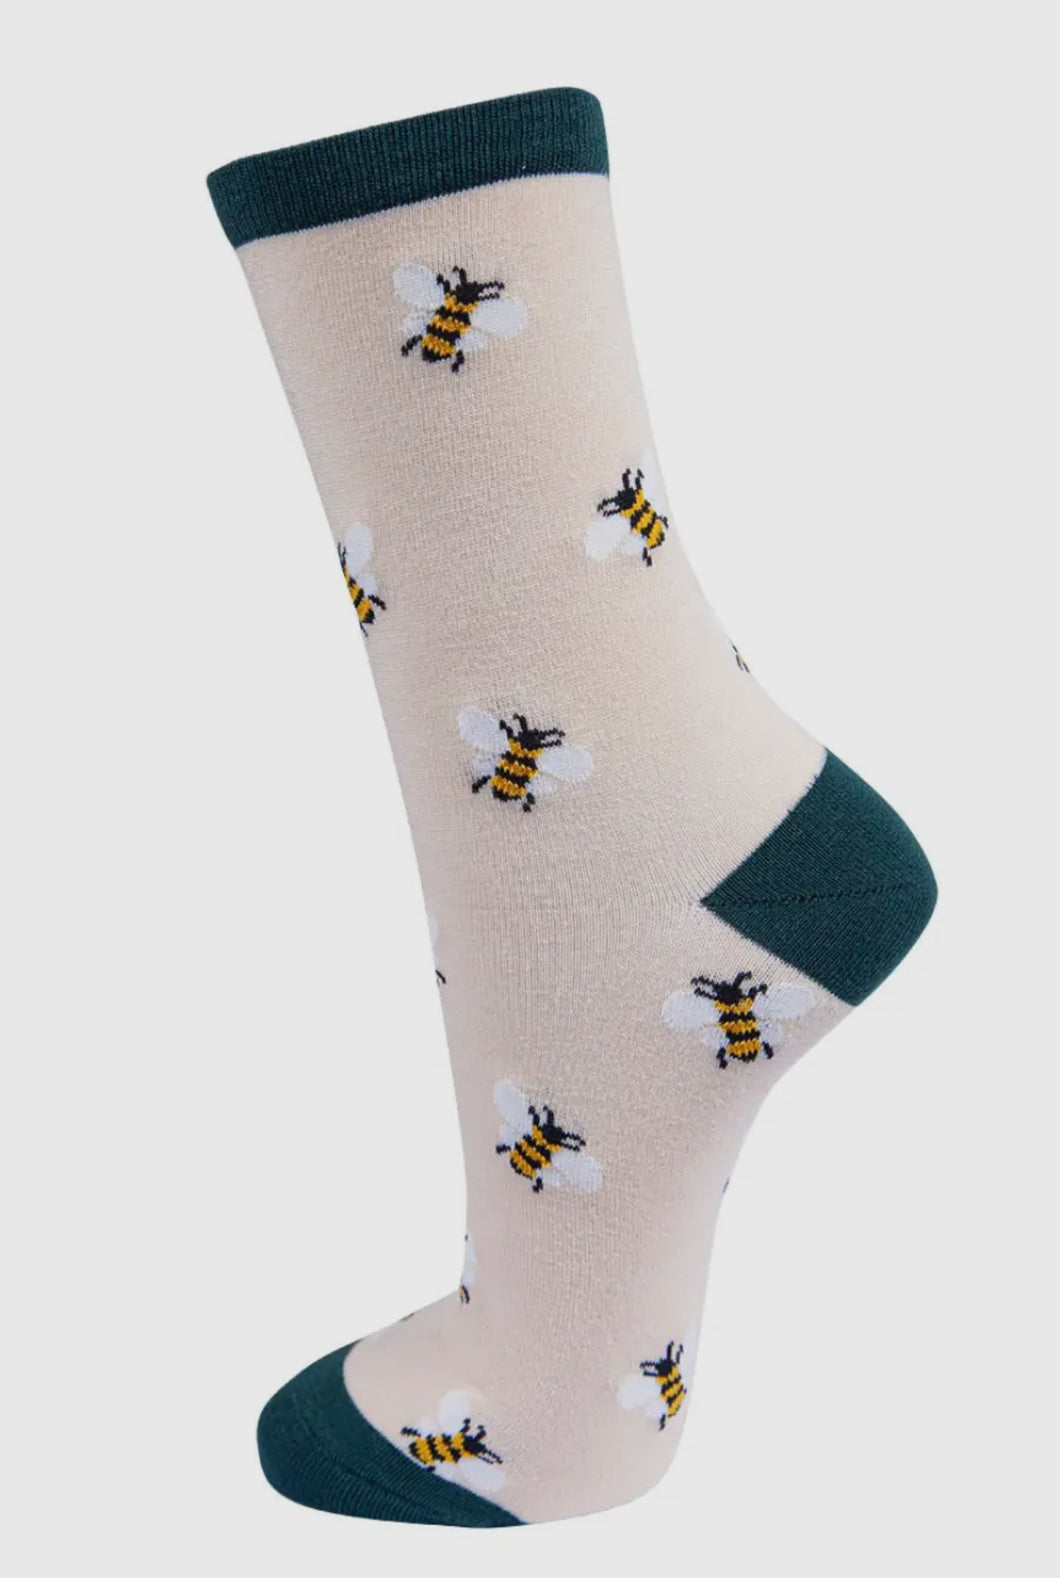 Sock Talk Bee Socks